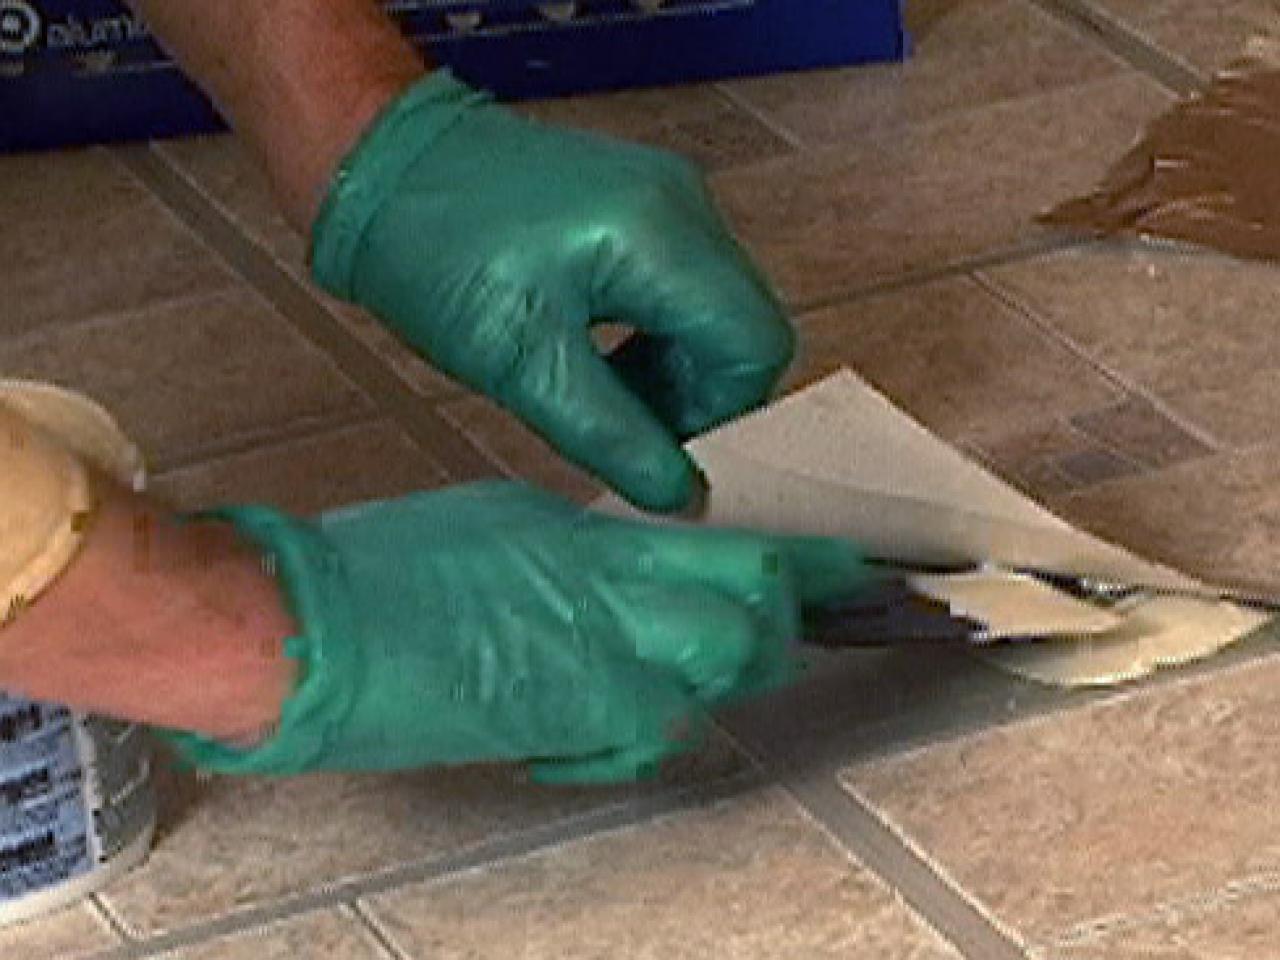 How To Fix Curling Vinyl Floor Tile, Seam Adhesive For Vinyl Flooring